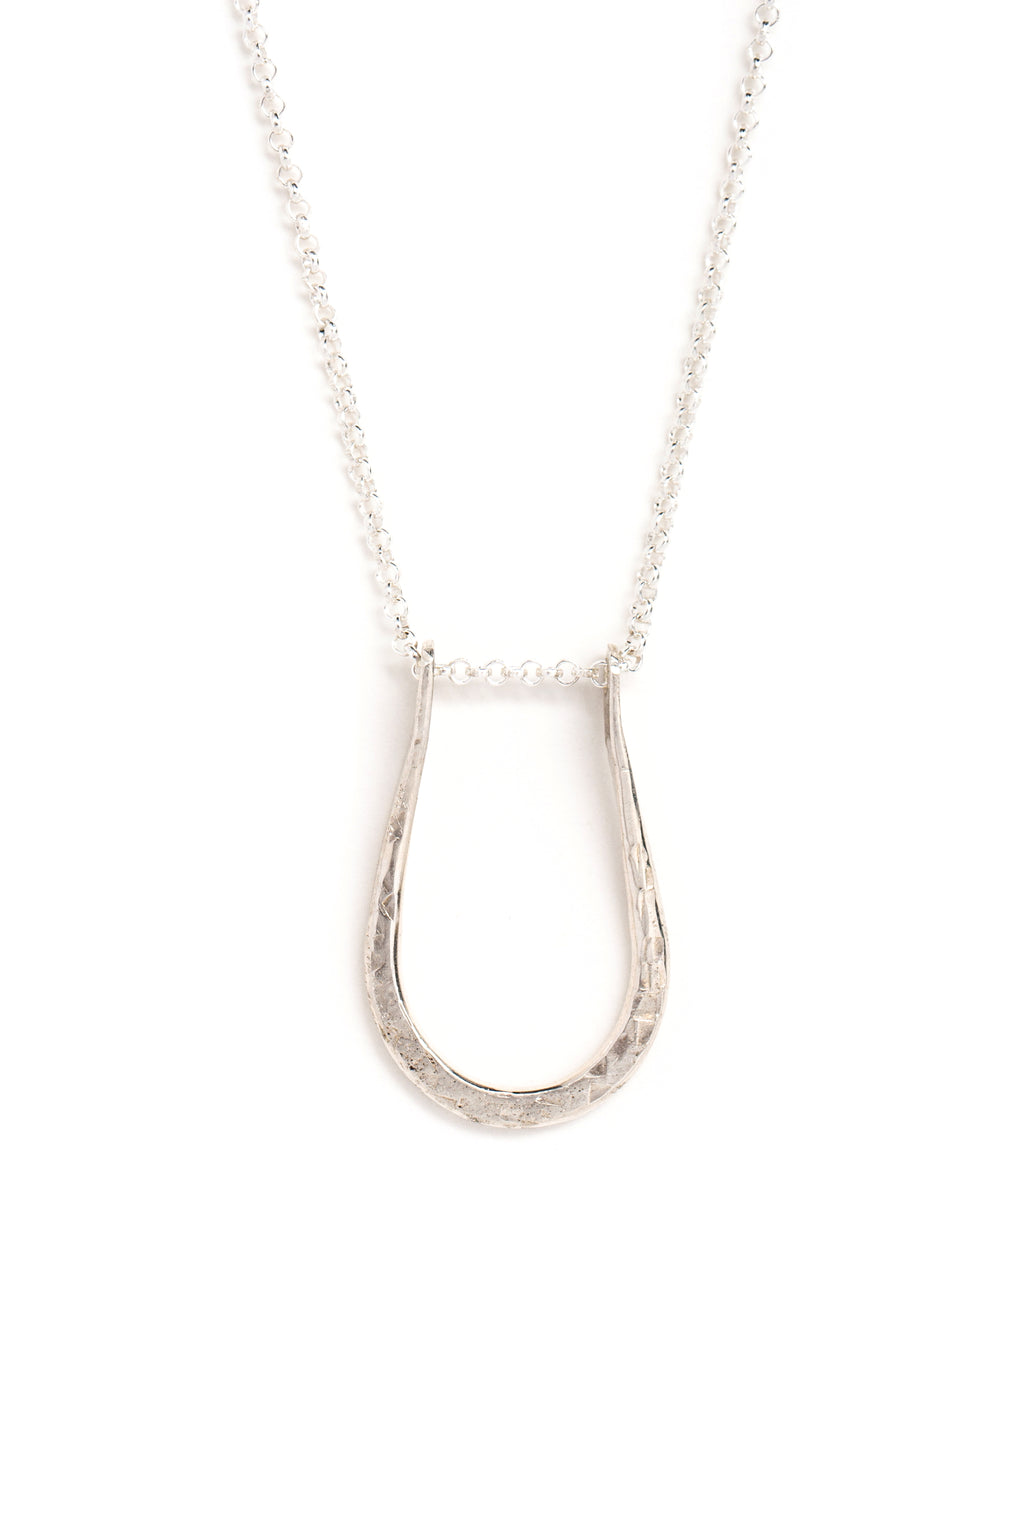 Silver Pinched “U” Necklace (closeup)